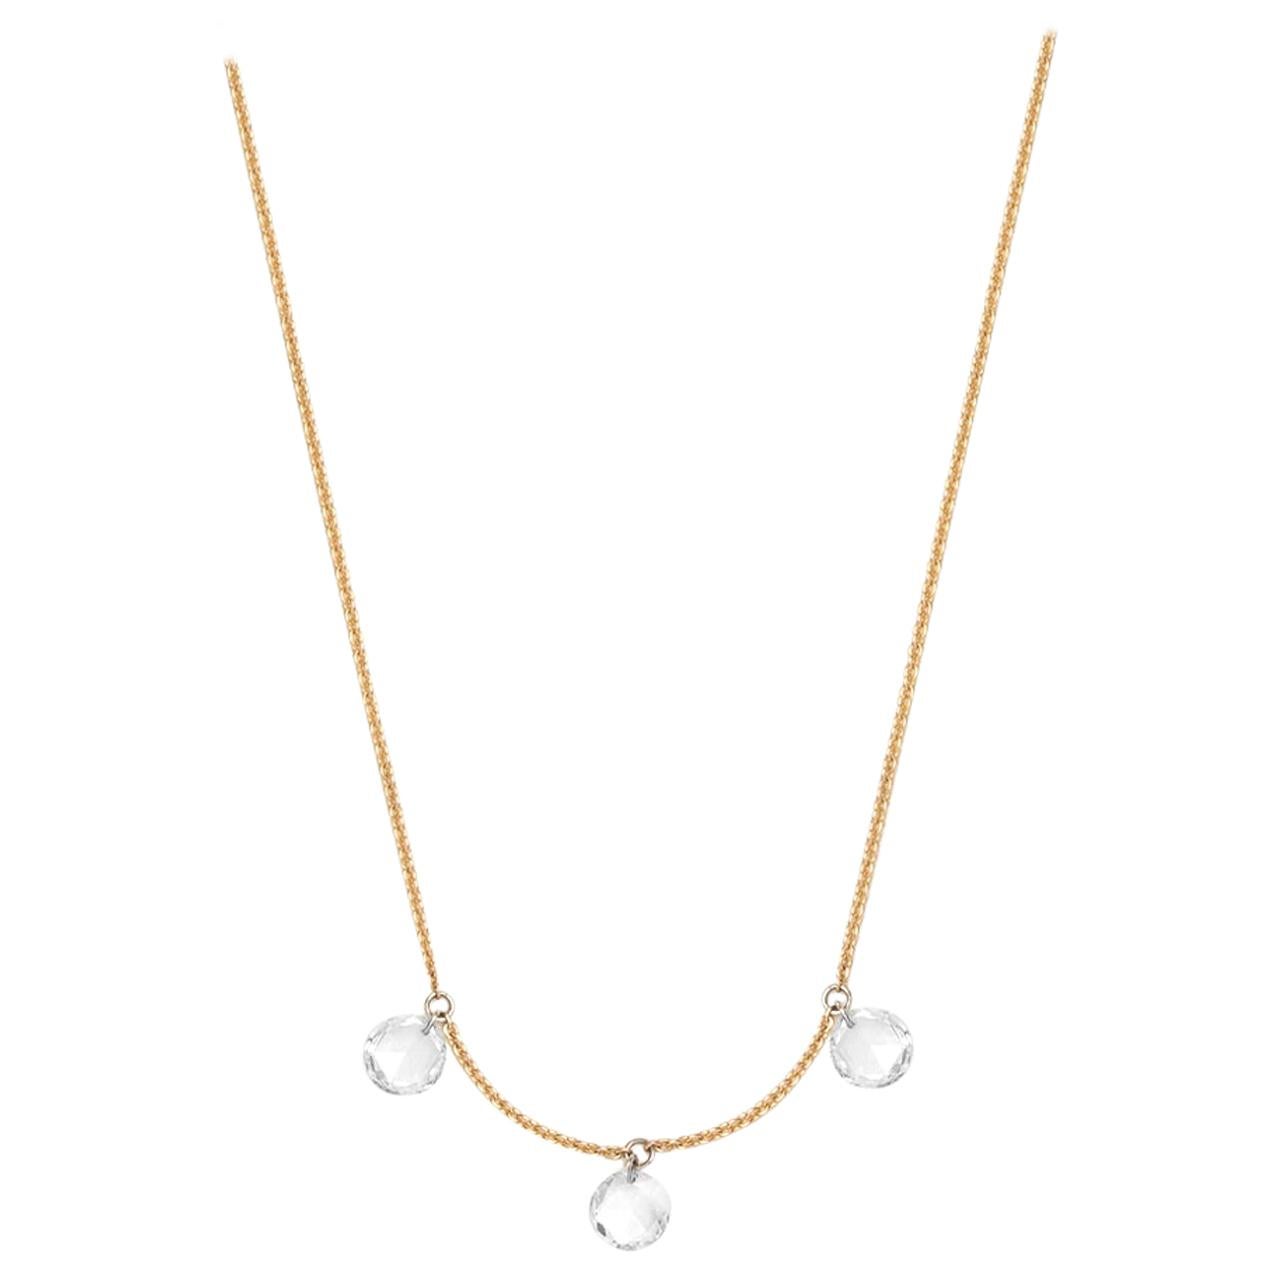 Artemis Necklace, Floating Rose Cut Diamond Necklace For Sale